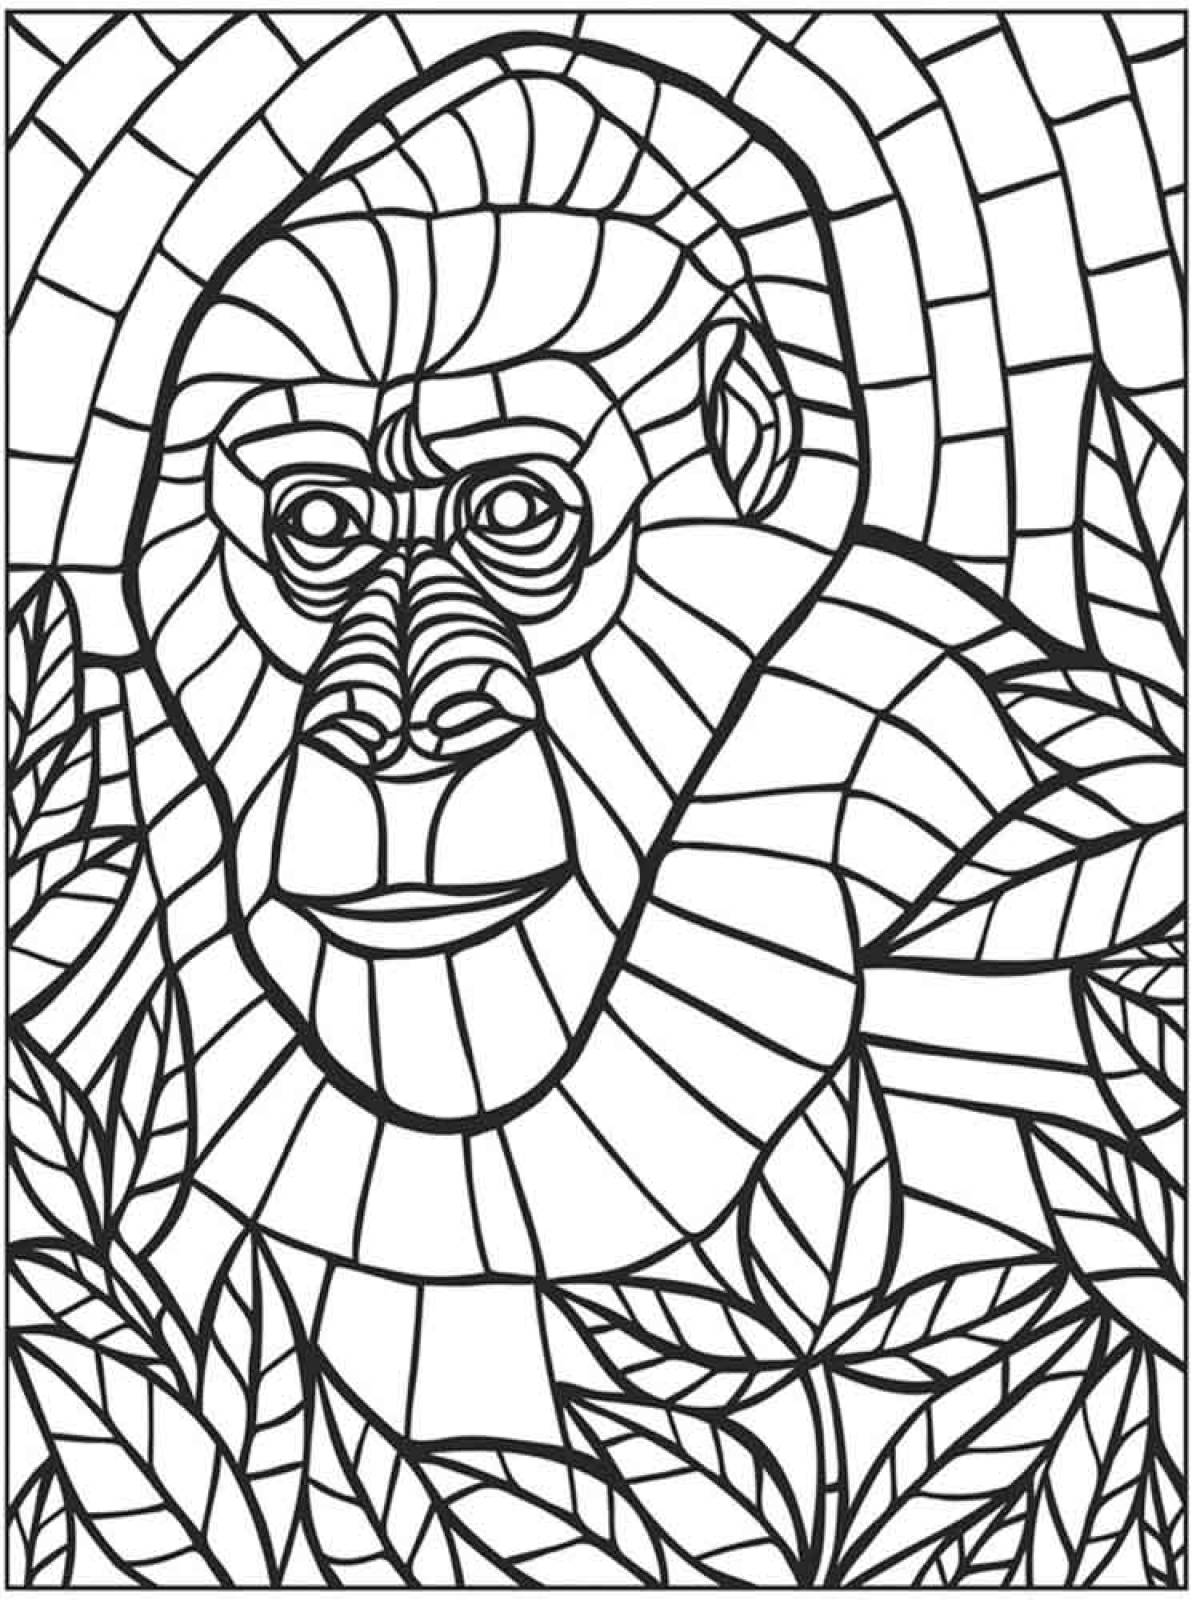 Мозаика горилла